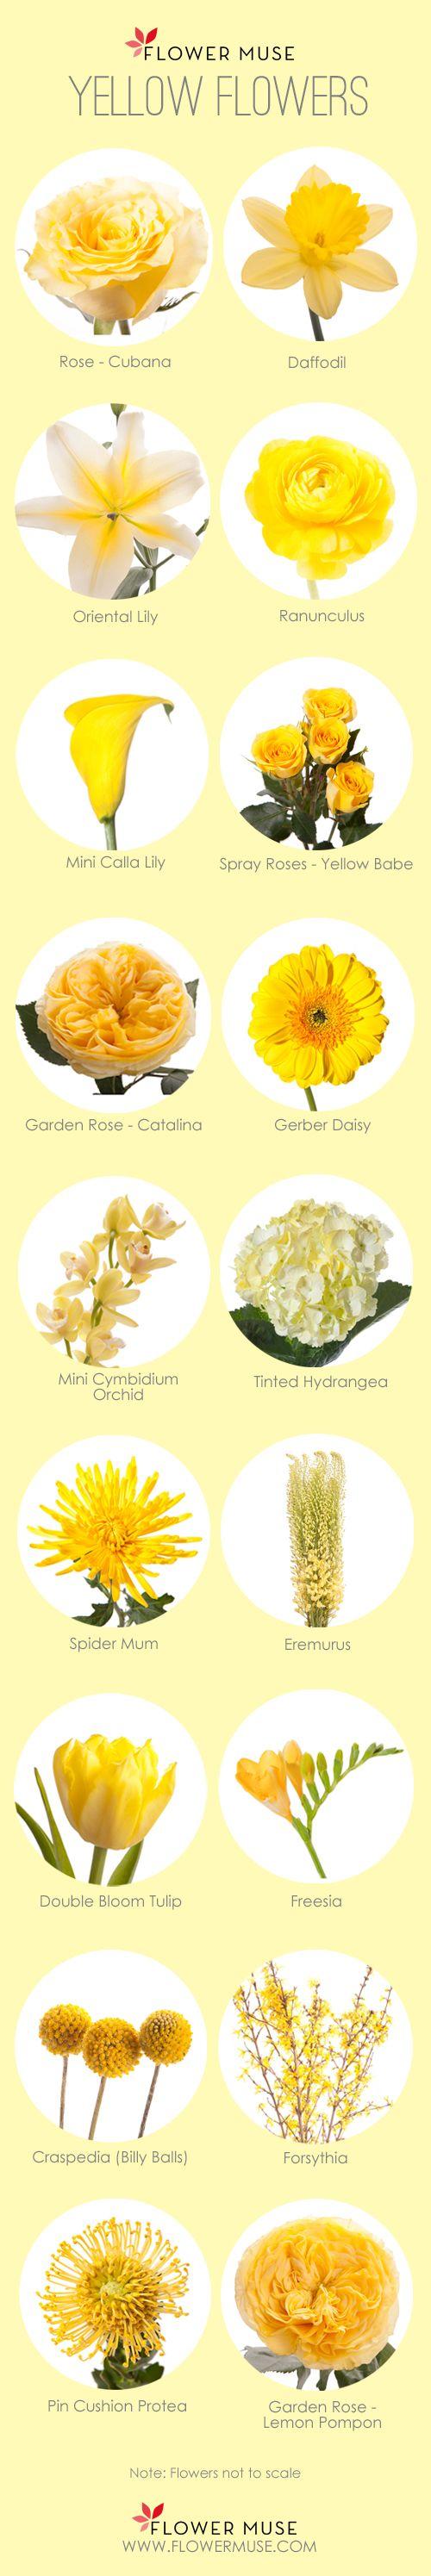 Hochzeit - Our Favorite: Yellow Flowers - Flower Muse Blog